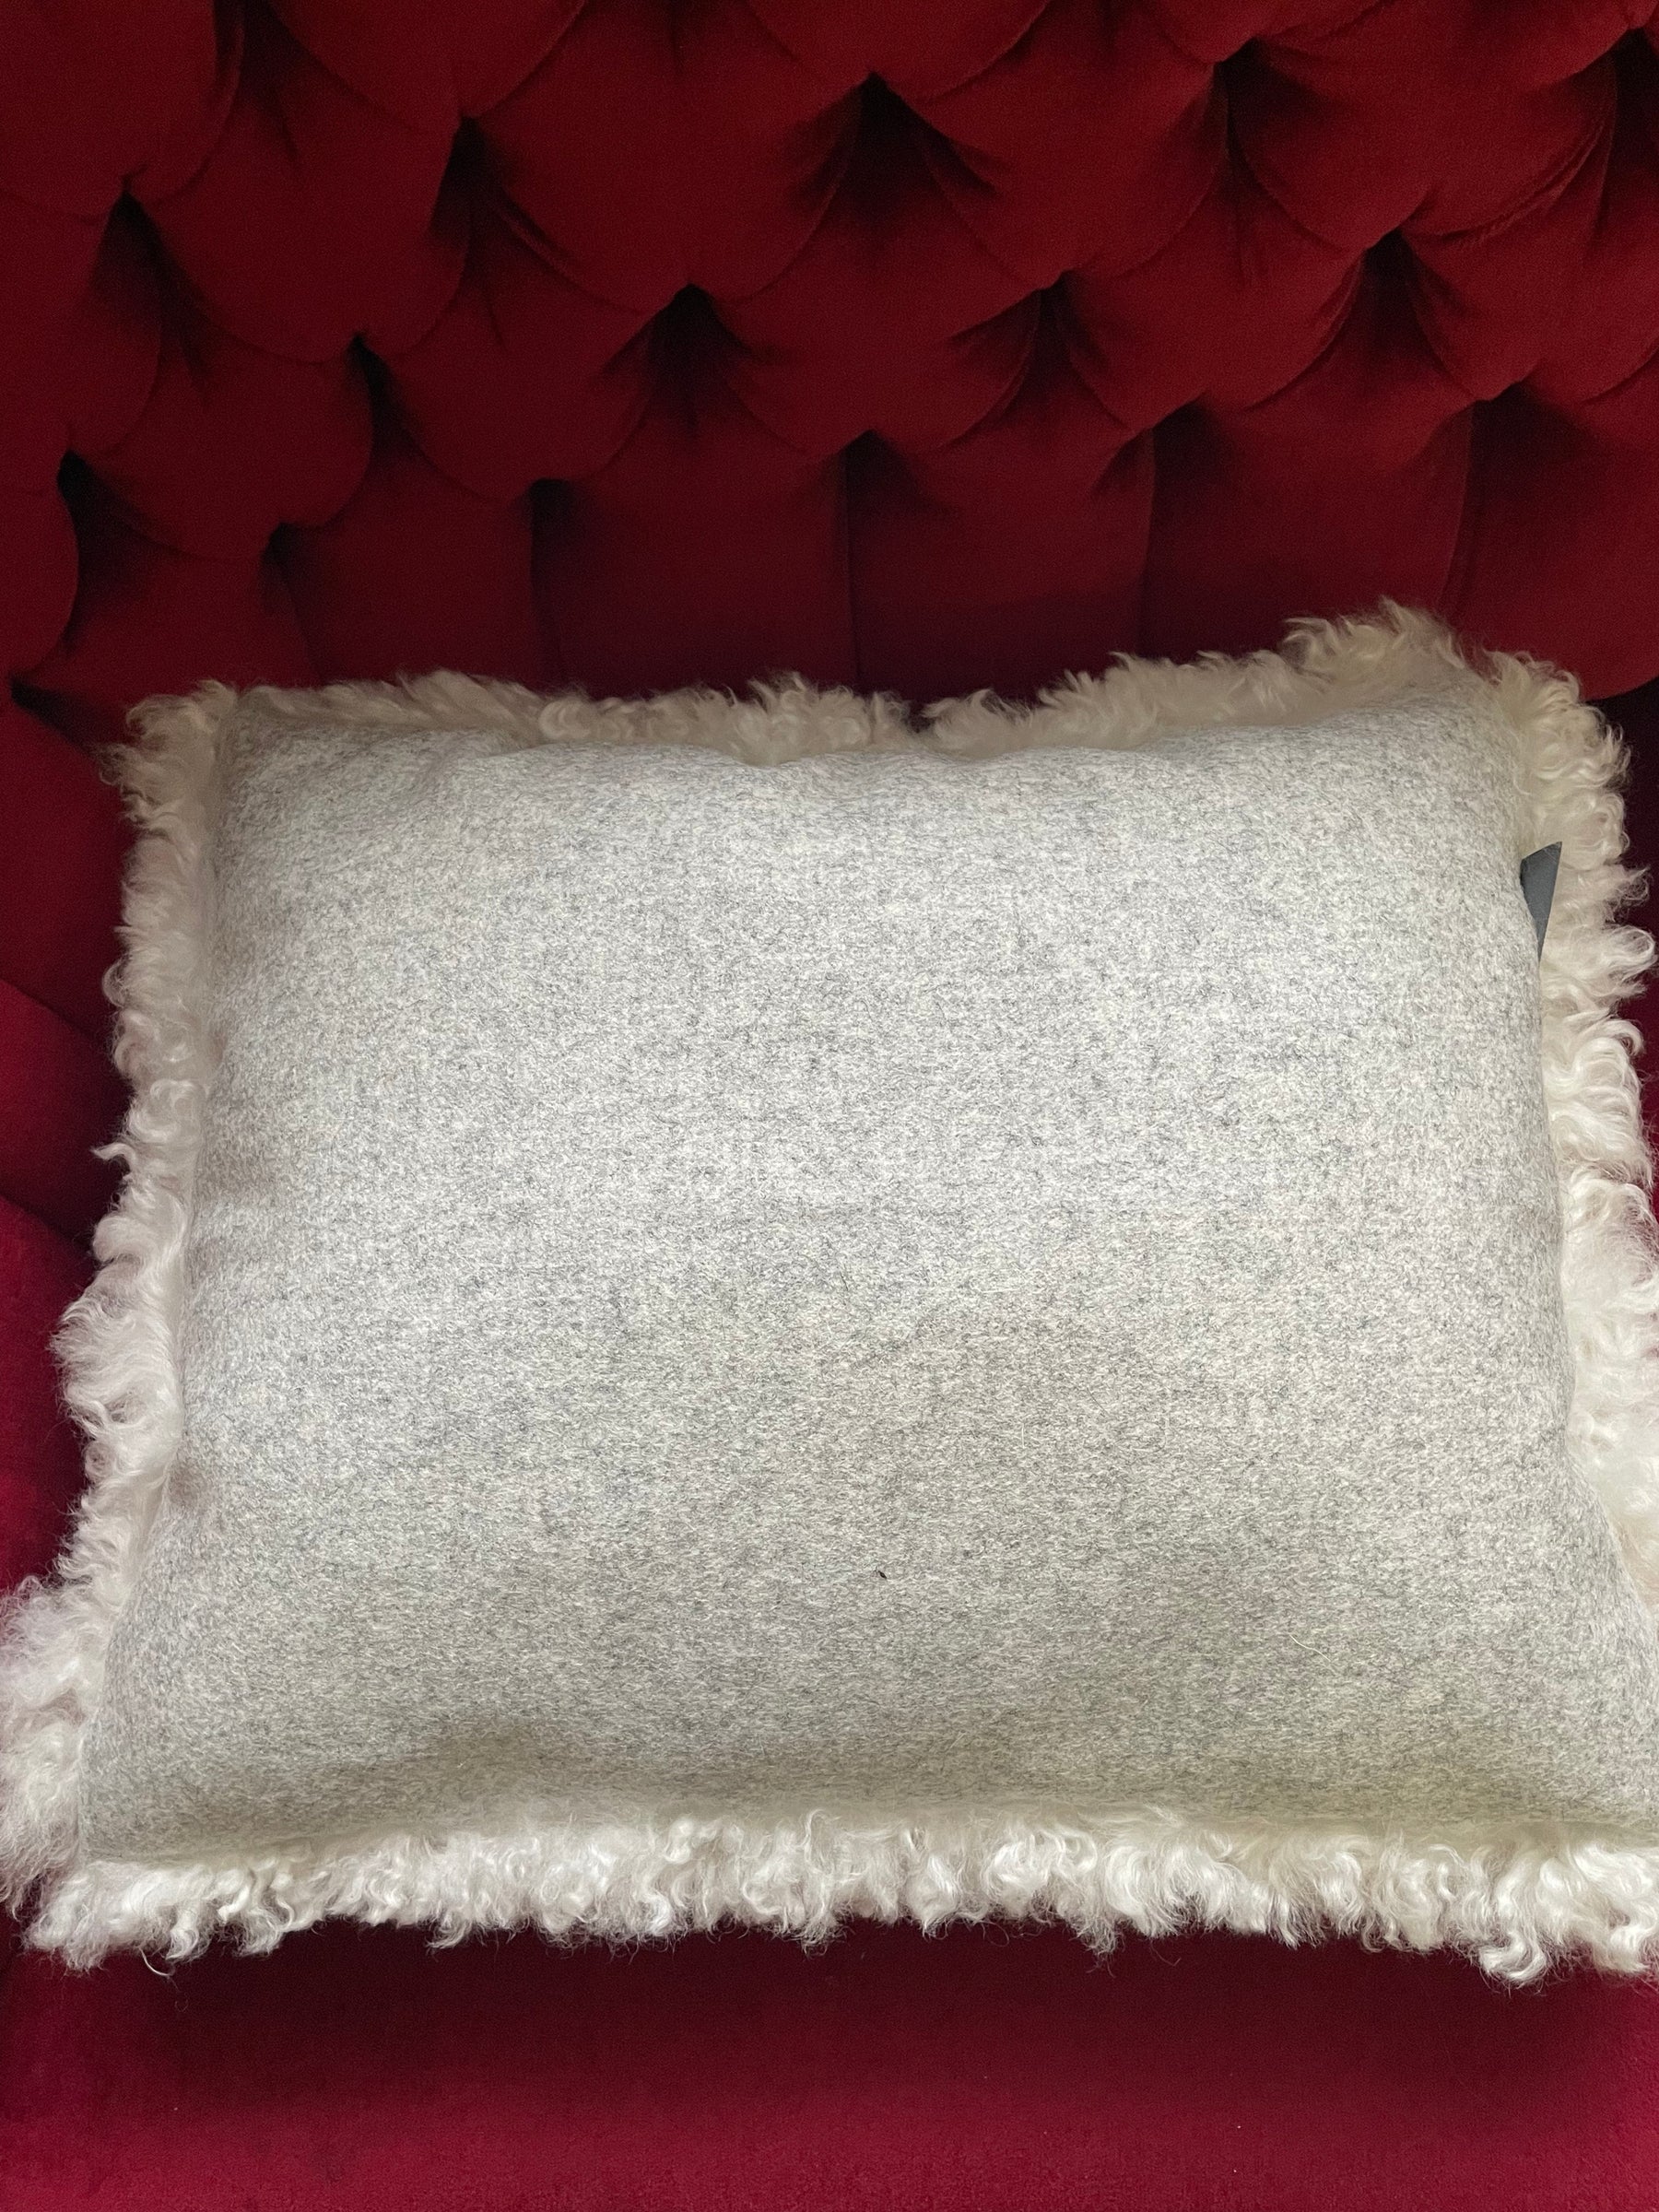 Sheepskin pillow in white silk curls.